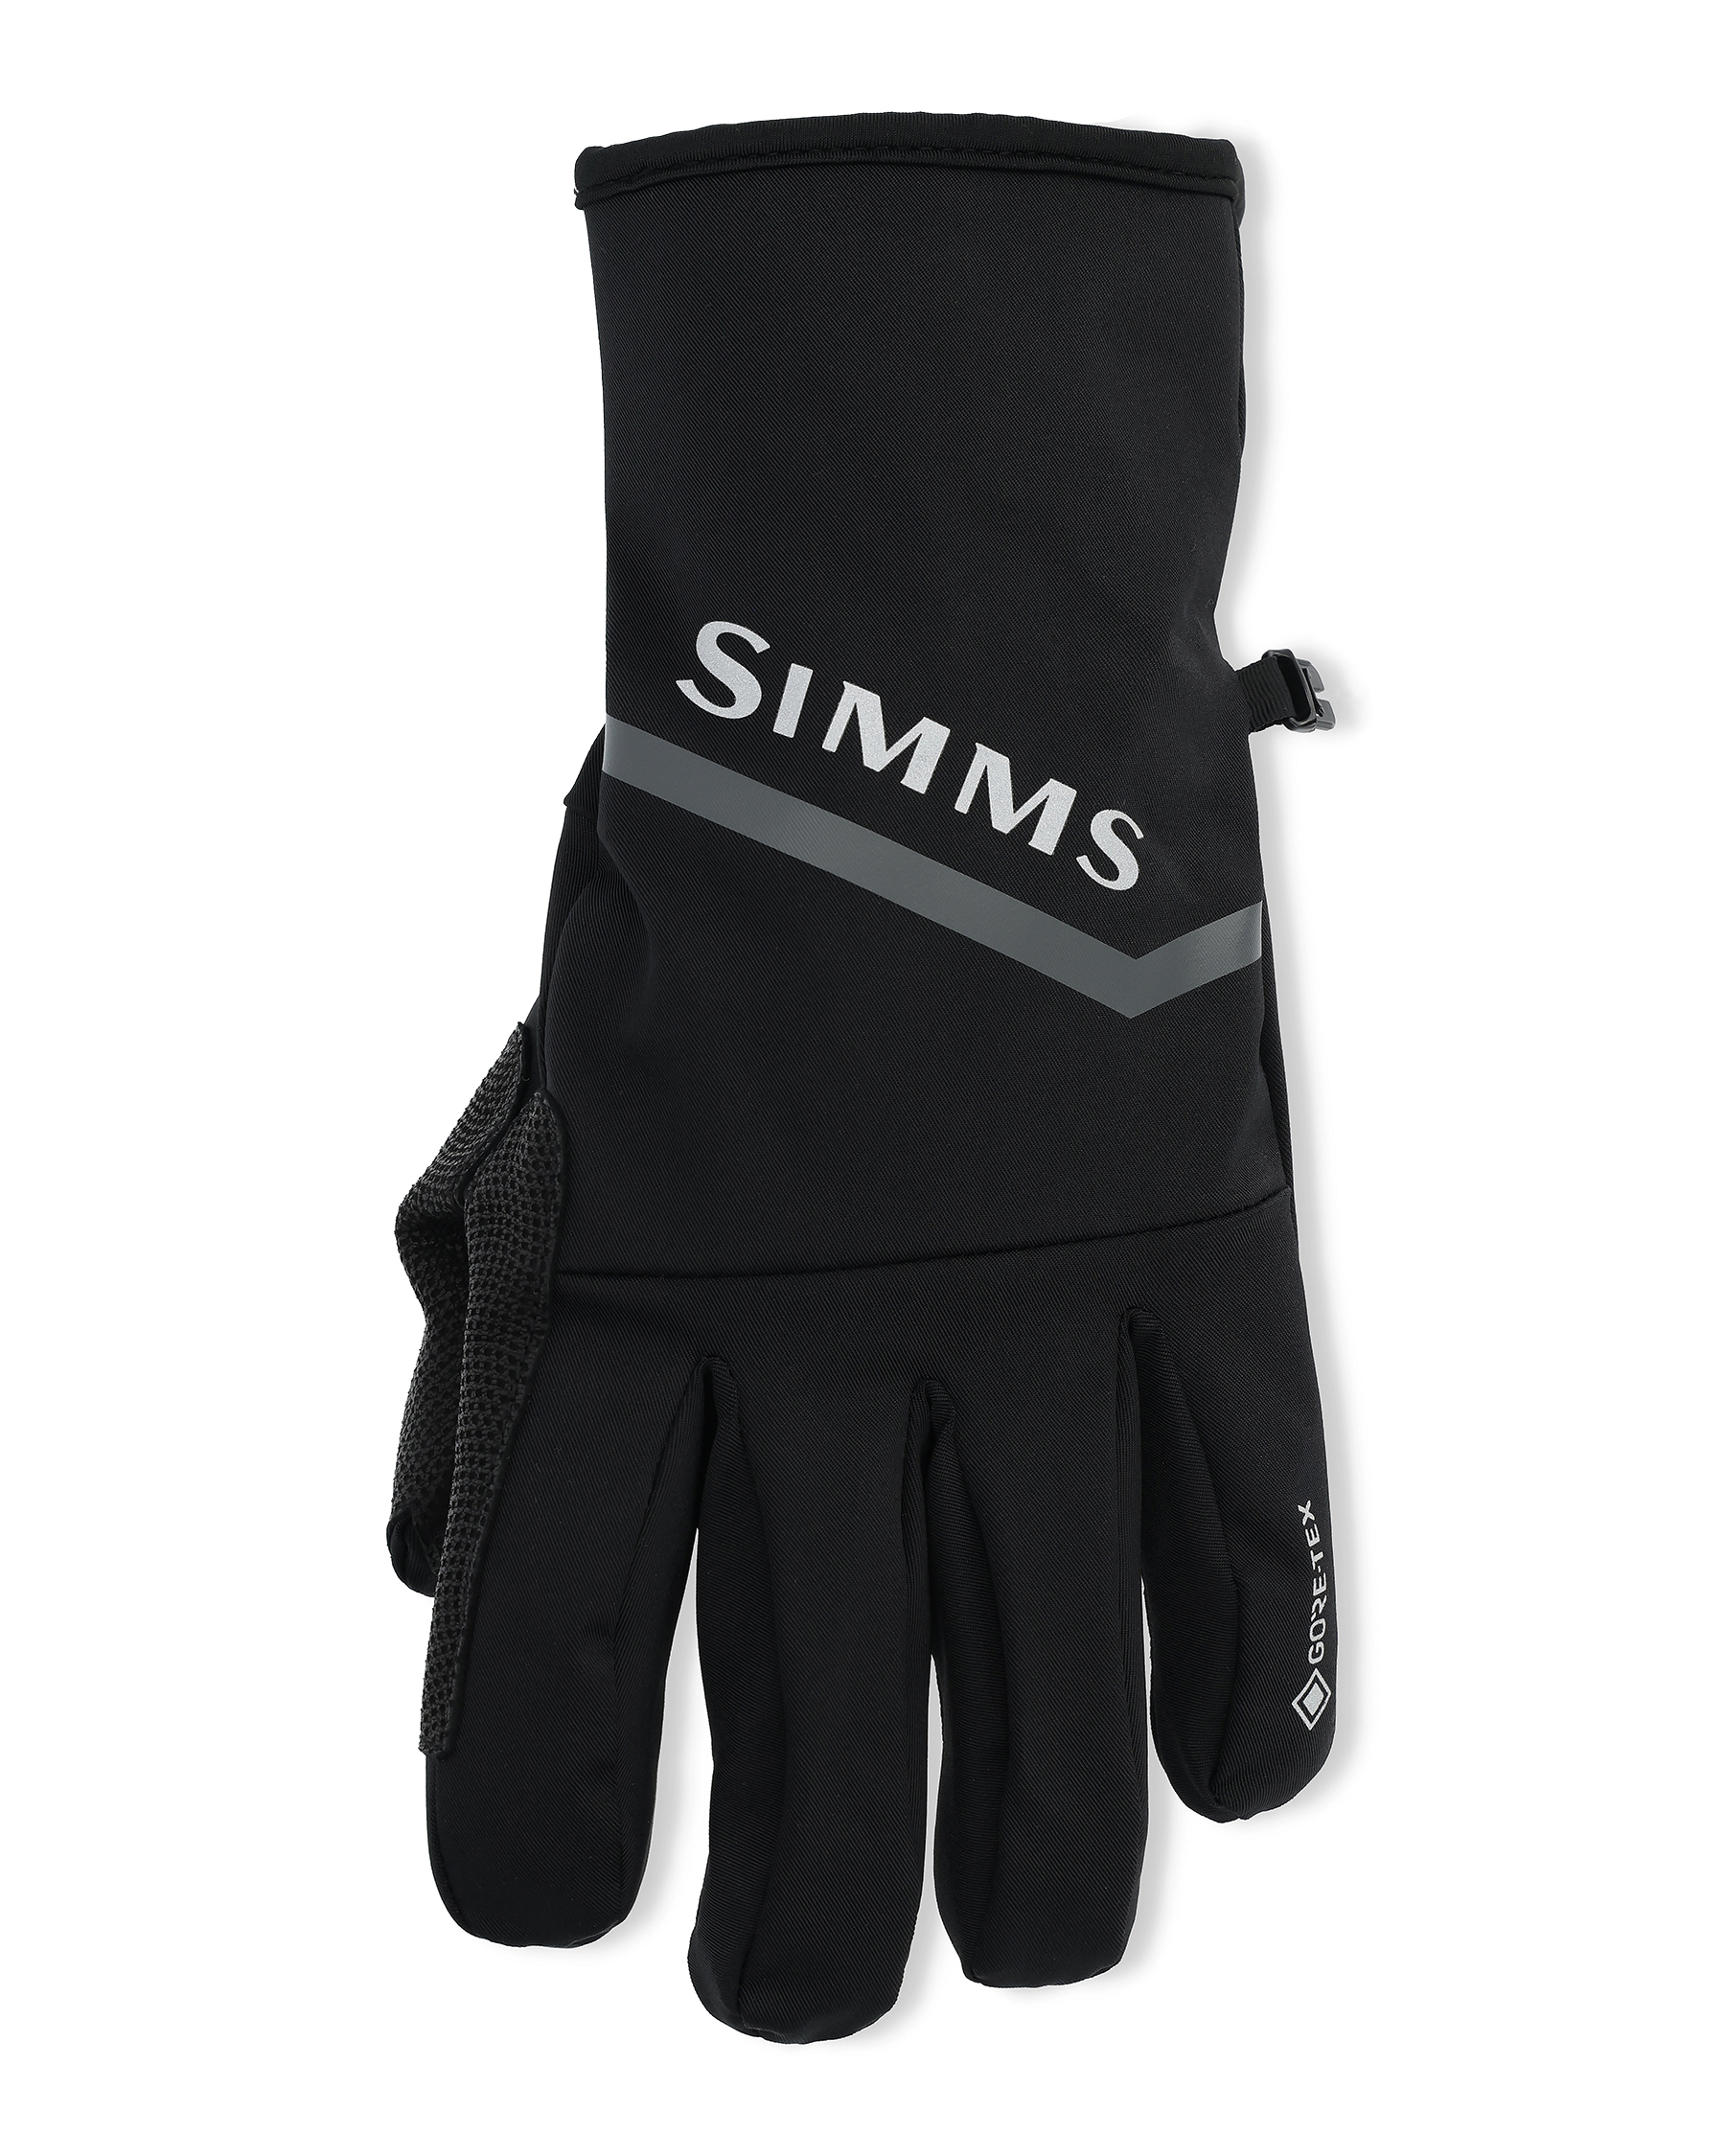 Pro Dry Gore-Tex Glove + Liner | Simms | マーヴェリック / Maverick